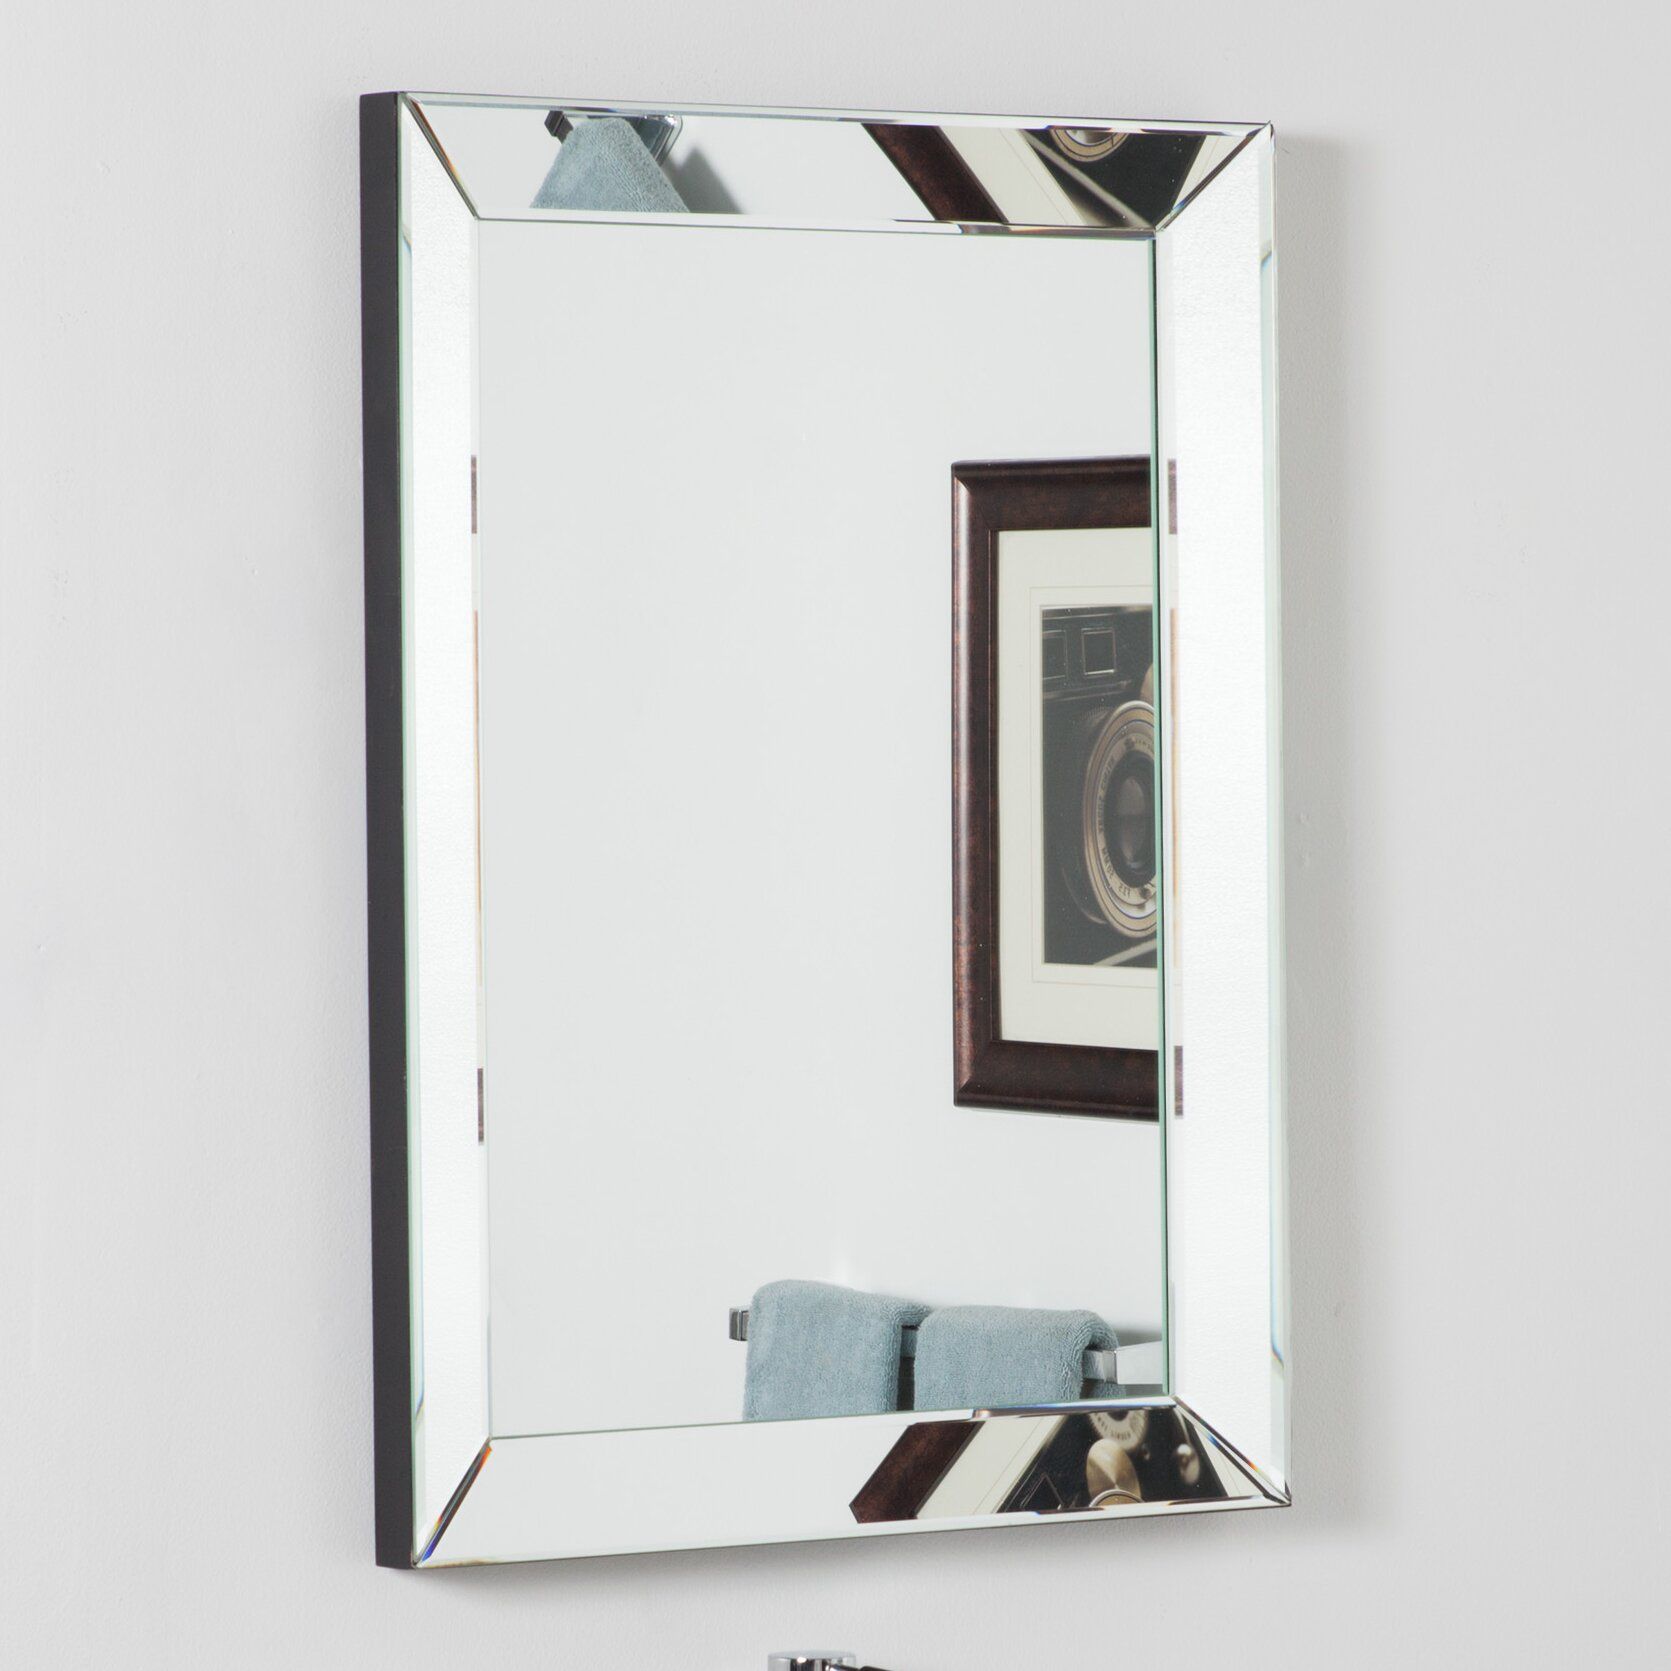 Decor Wonderland Mirror Framed Wall Mirror & Reviews | Wayfair For Mirror Framed Bathroom Wall Mirrors (View 12 of 15)